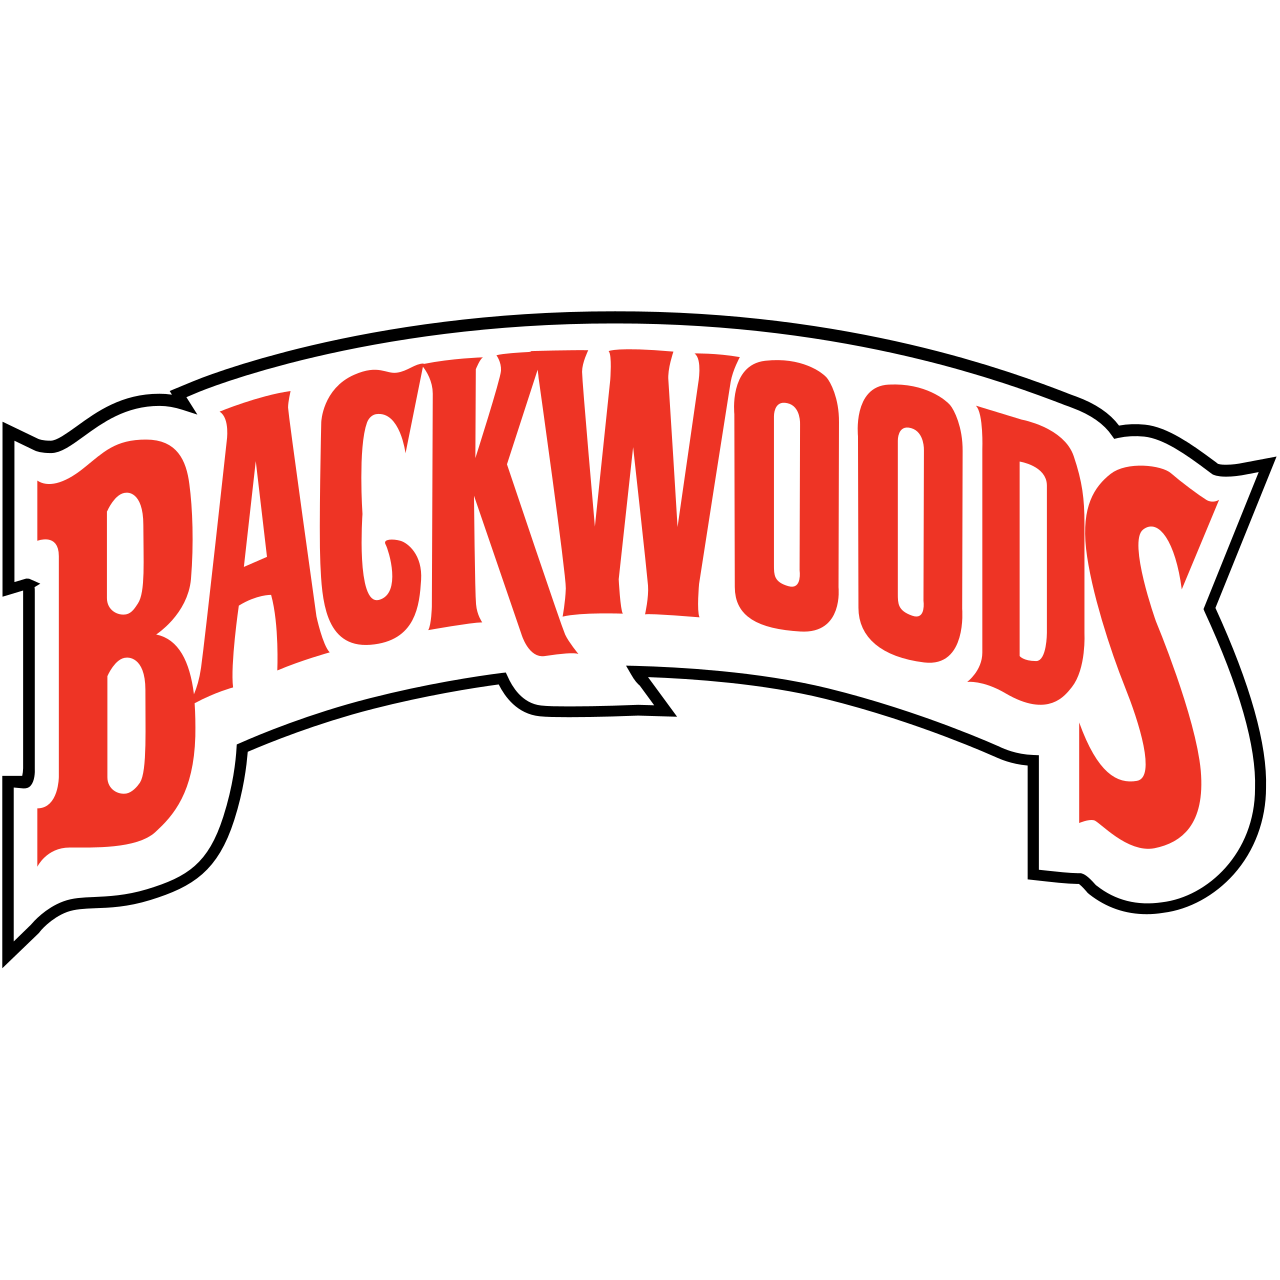 Backwoods Bags